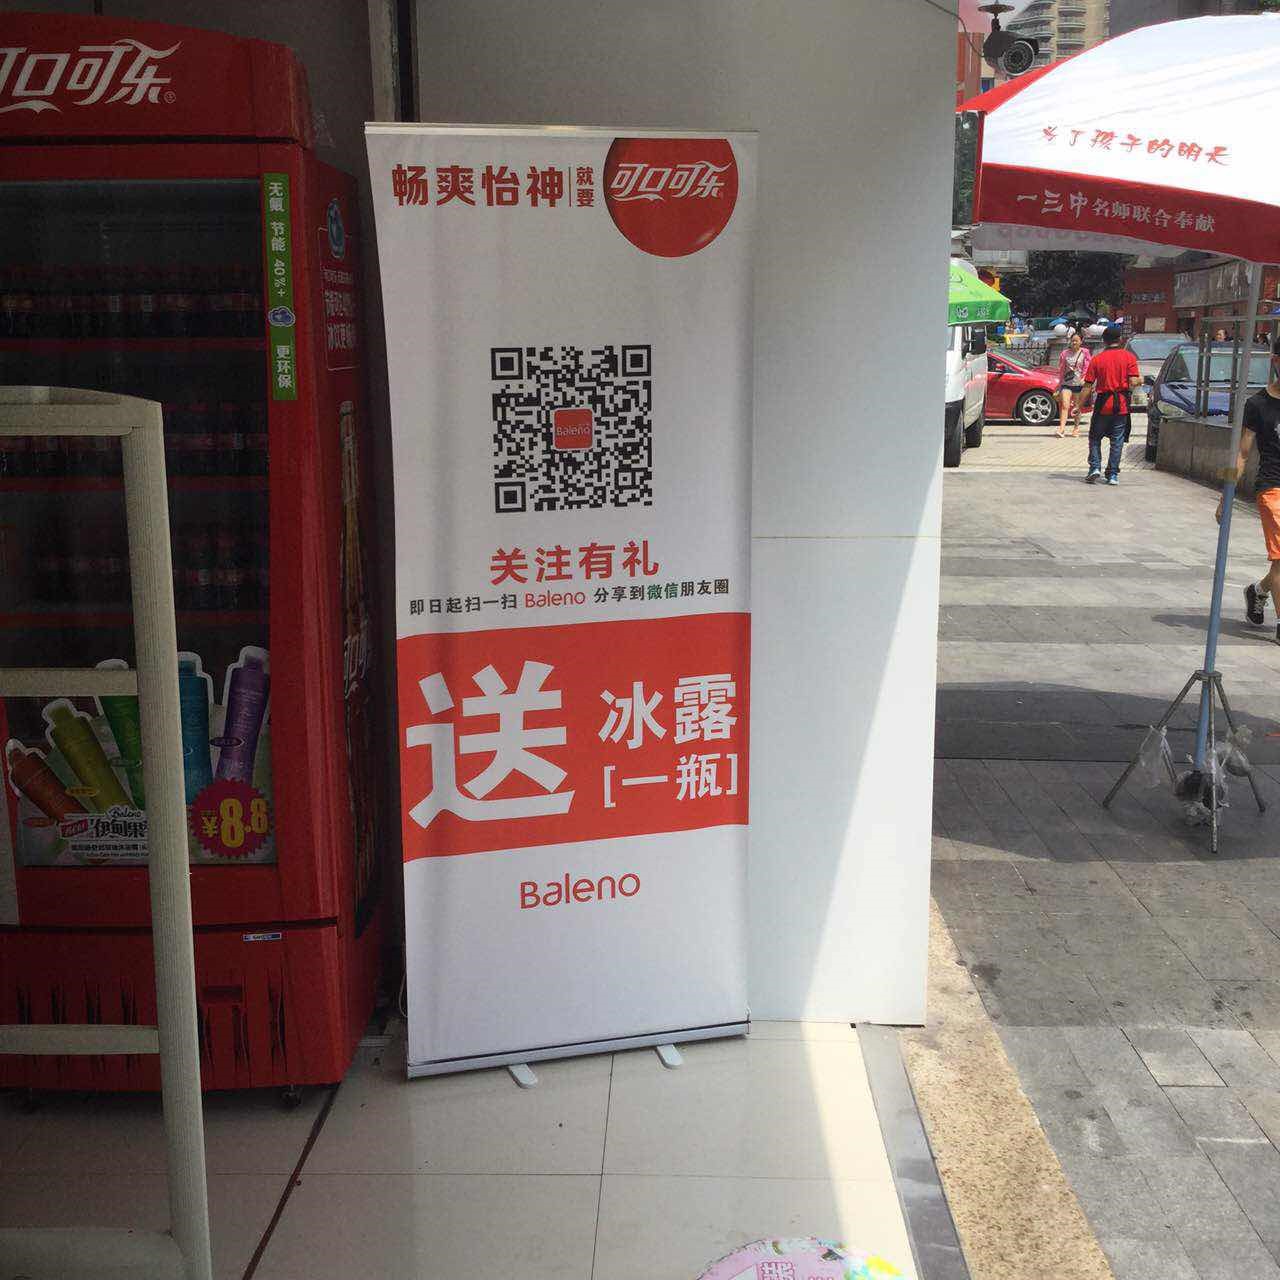 WeChat QR Code Promotion.jpg